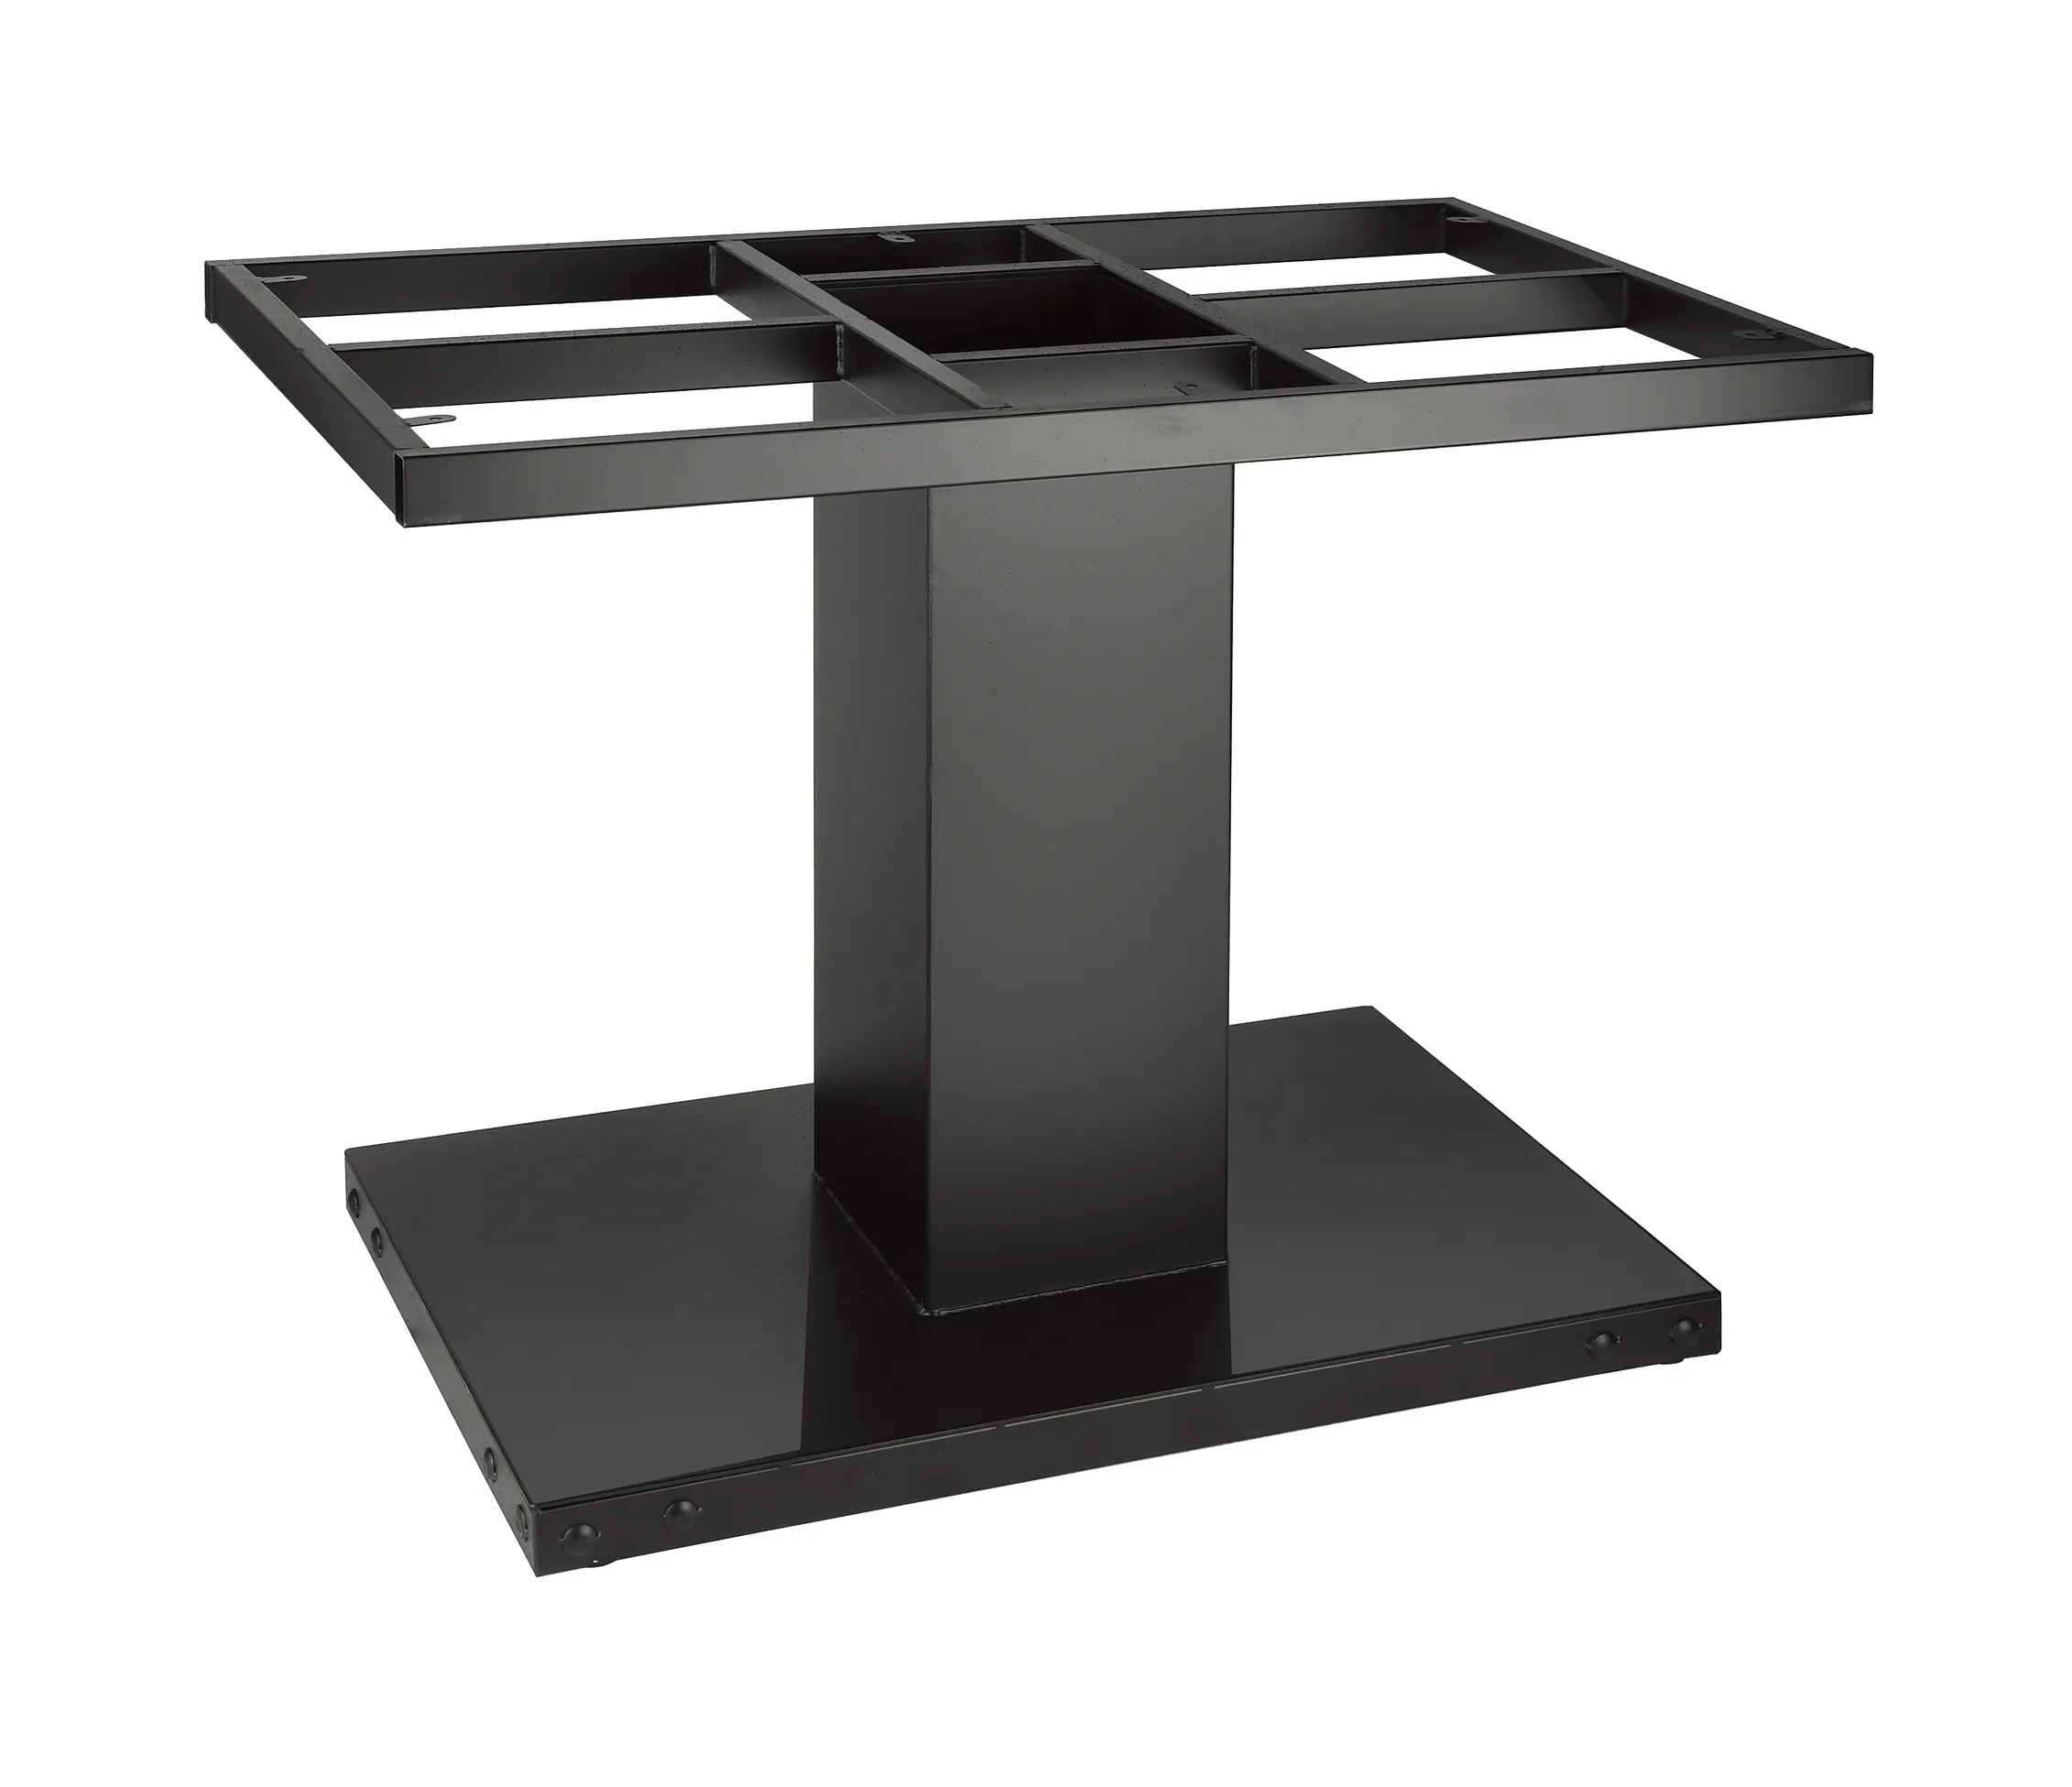 Altura contador bronze pedestal bar perna metal jantar pernas oval mesa medíocre base para a mesa de café